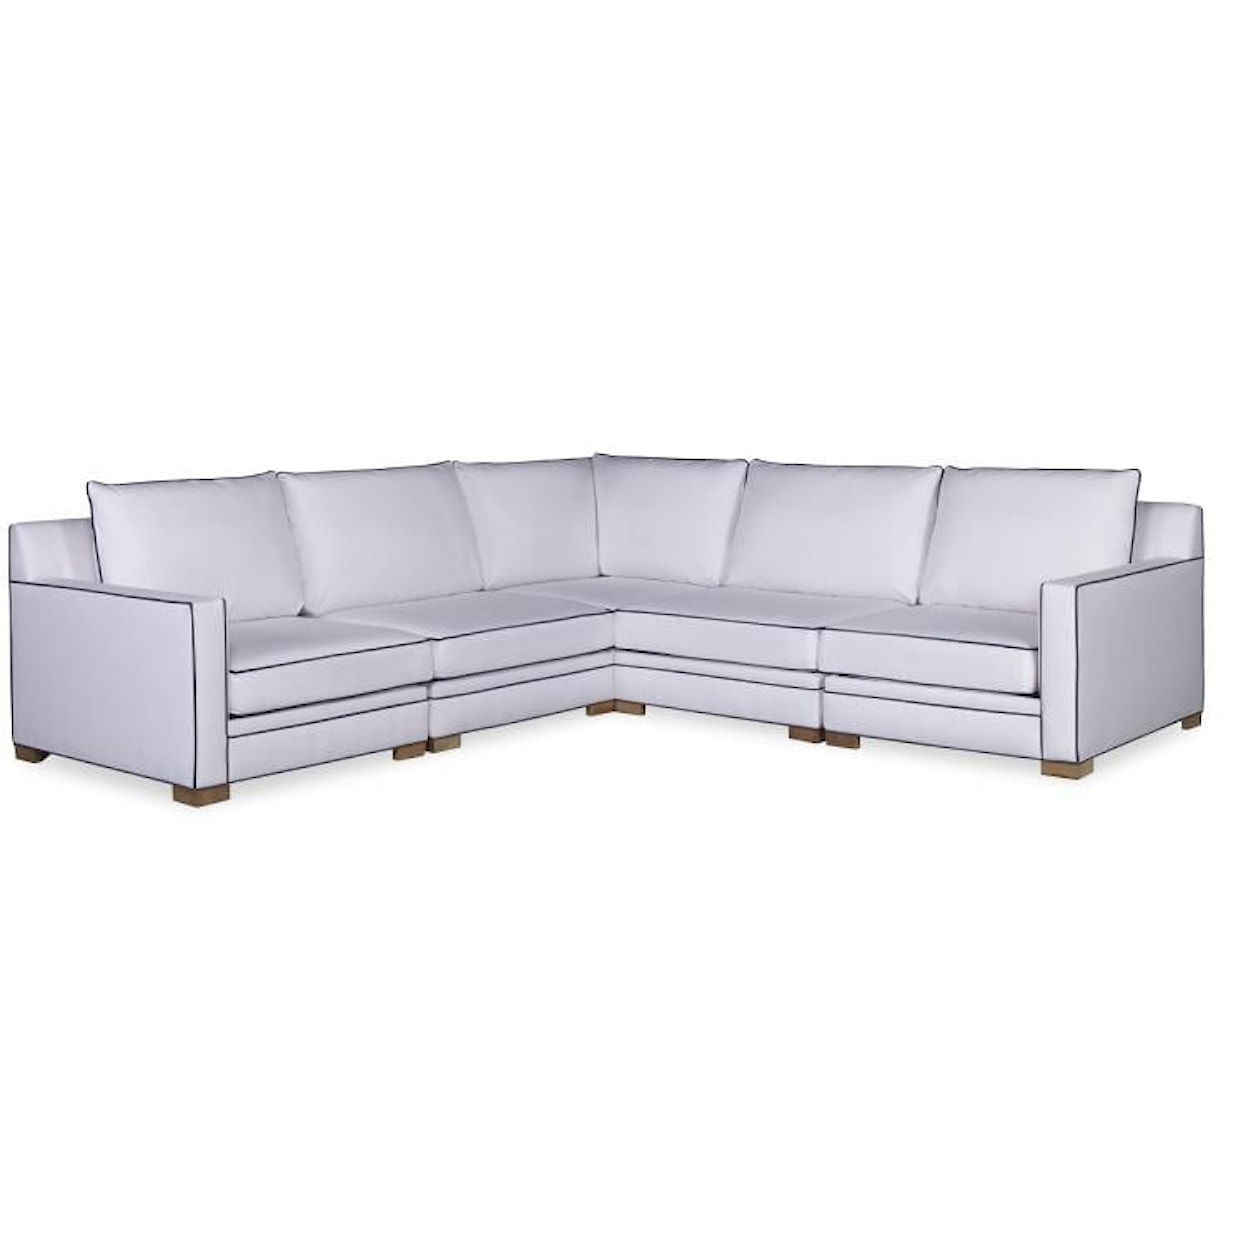 Century Outdoor Upholstery Leyland Outdoor Sectional Sofa